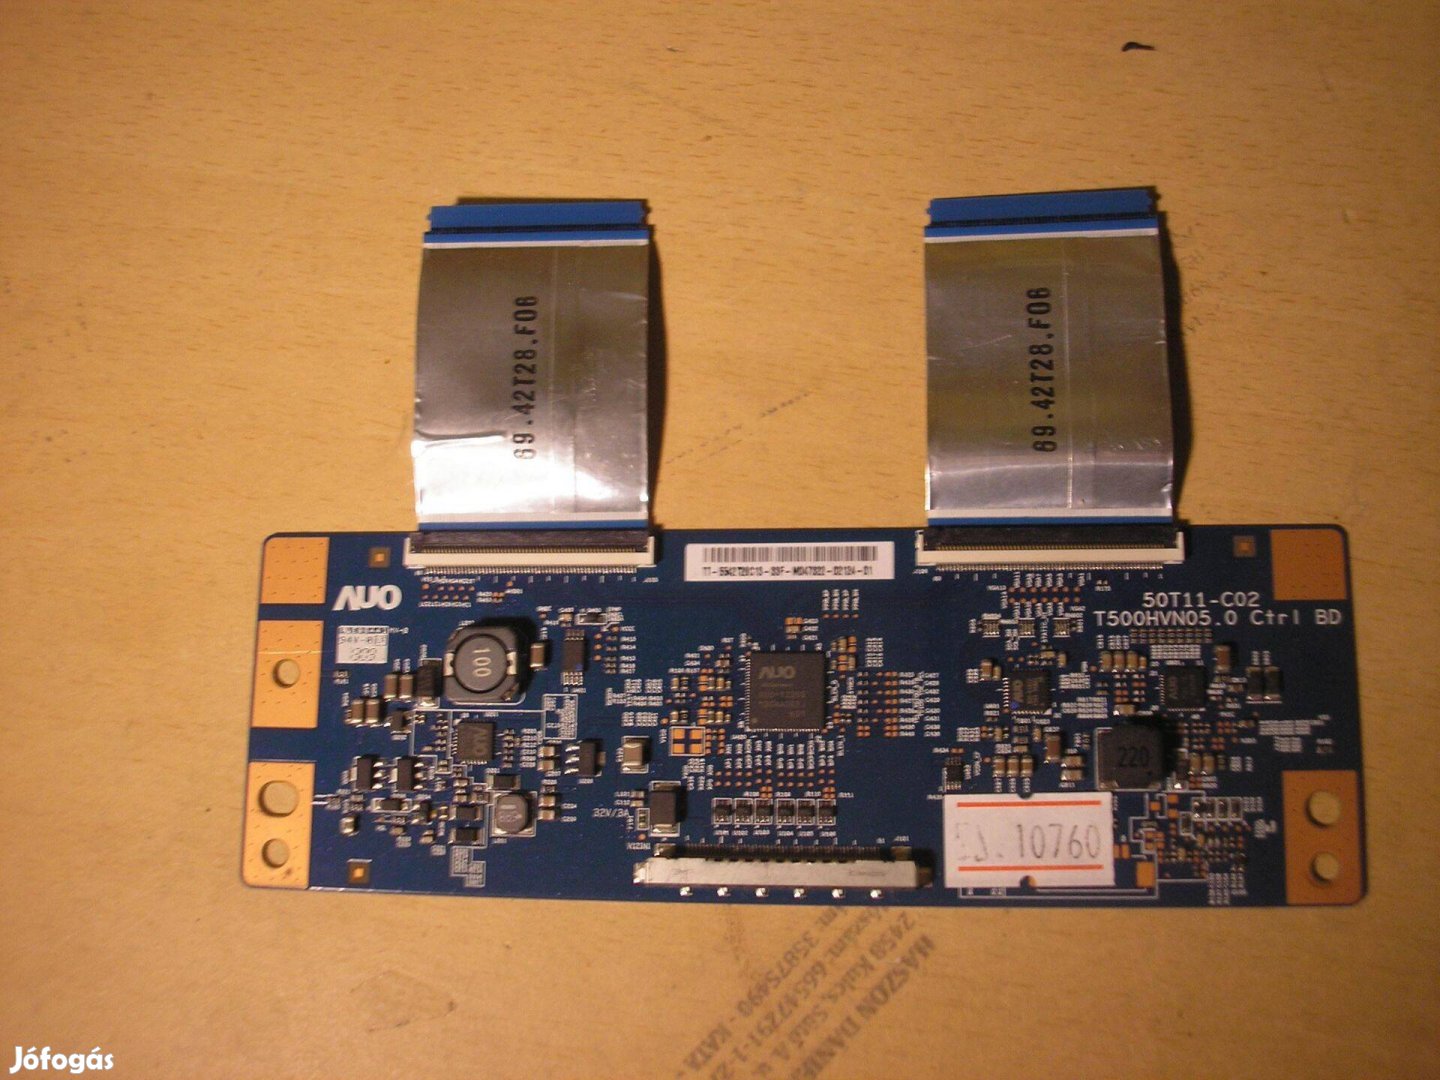 10760 hibás Samsung UE40F5370 T-CON panel Auo 50T11-C02 T500Hvn05.0 Ct